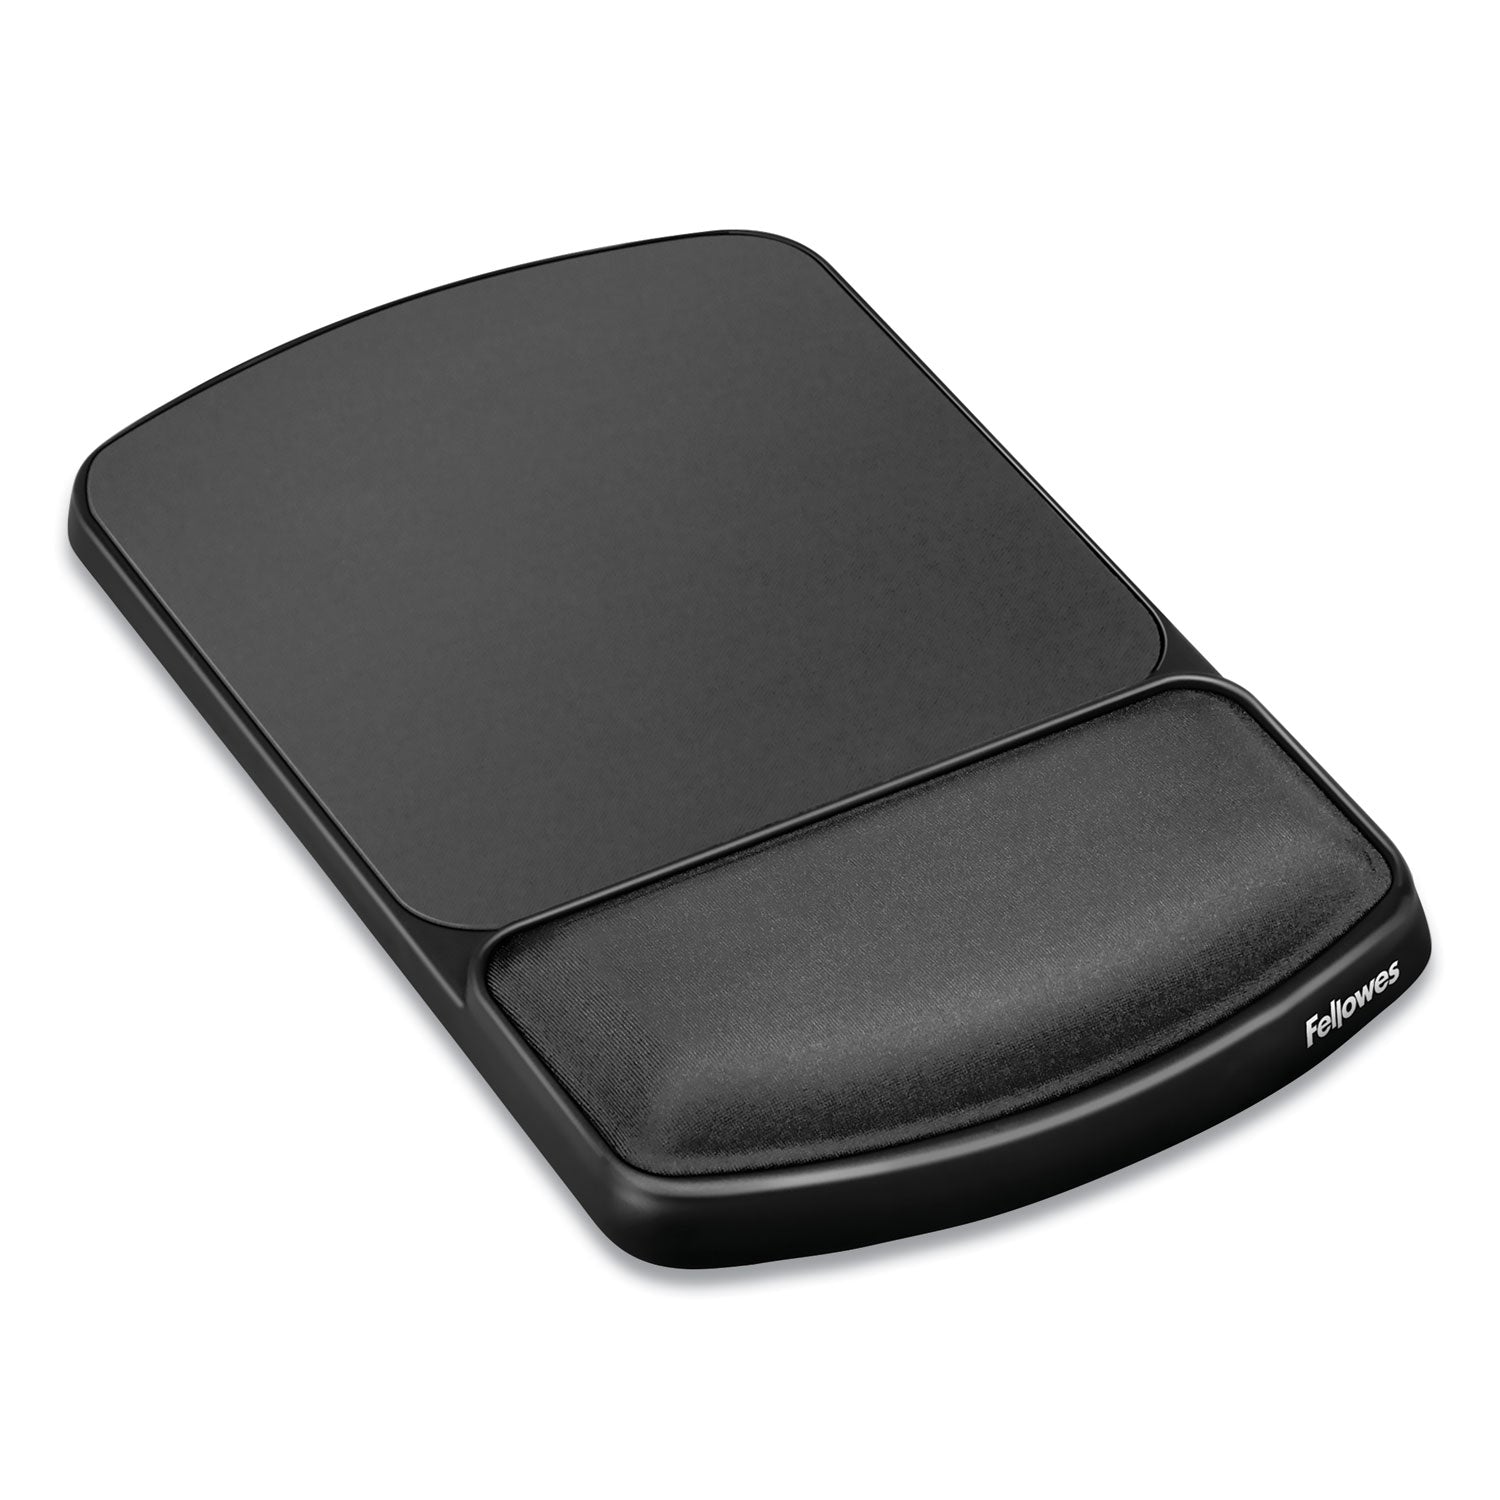 Gel Mouse Pad with Wrist Rest, 6.25 x 10.12, Graphite/Platinum - 